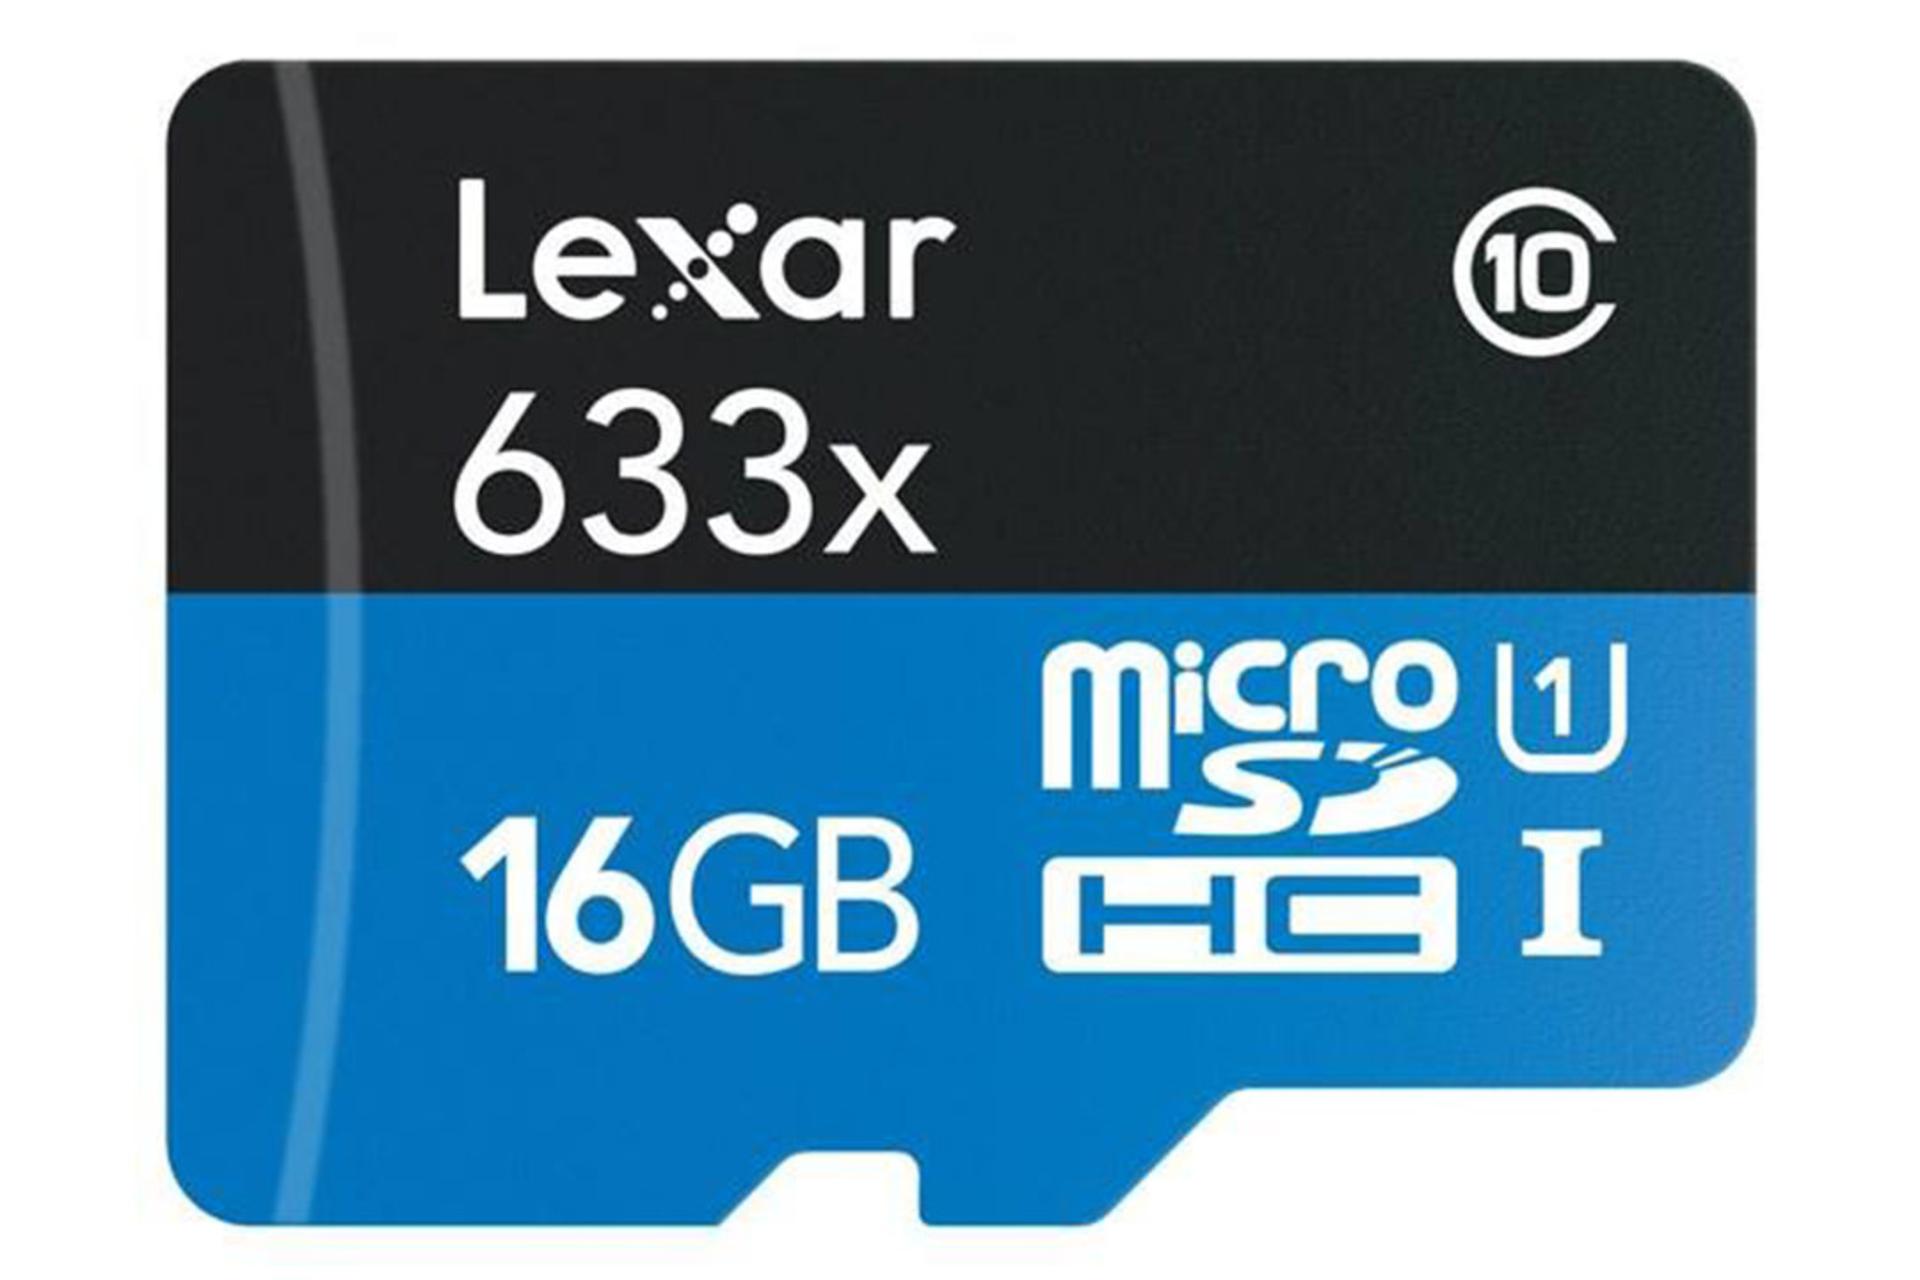 Lexar High Performance microSDHC Class 10 UHS-I U1 16GB